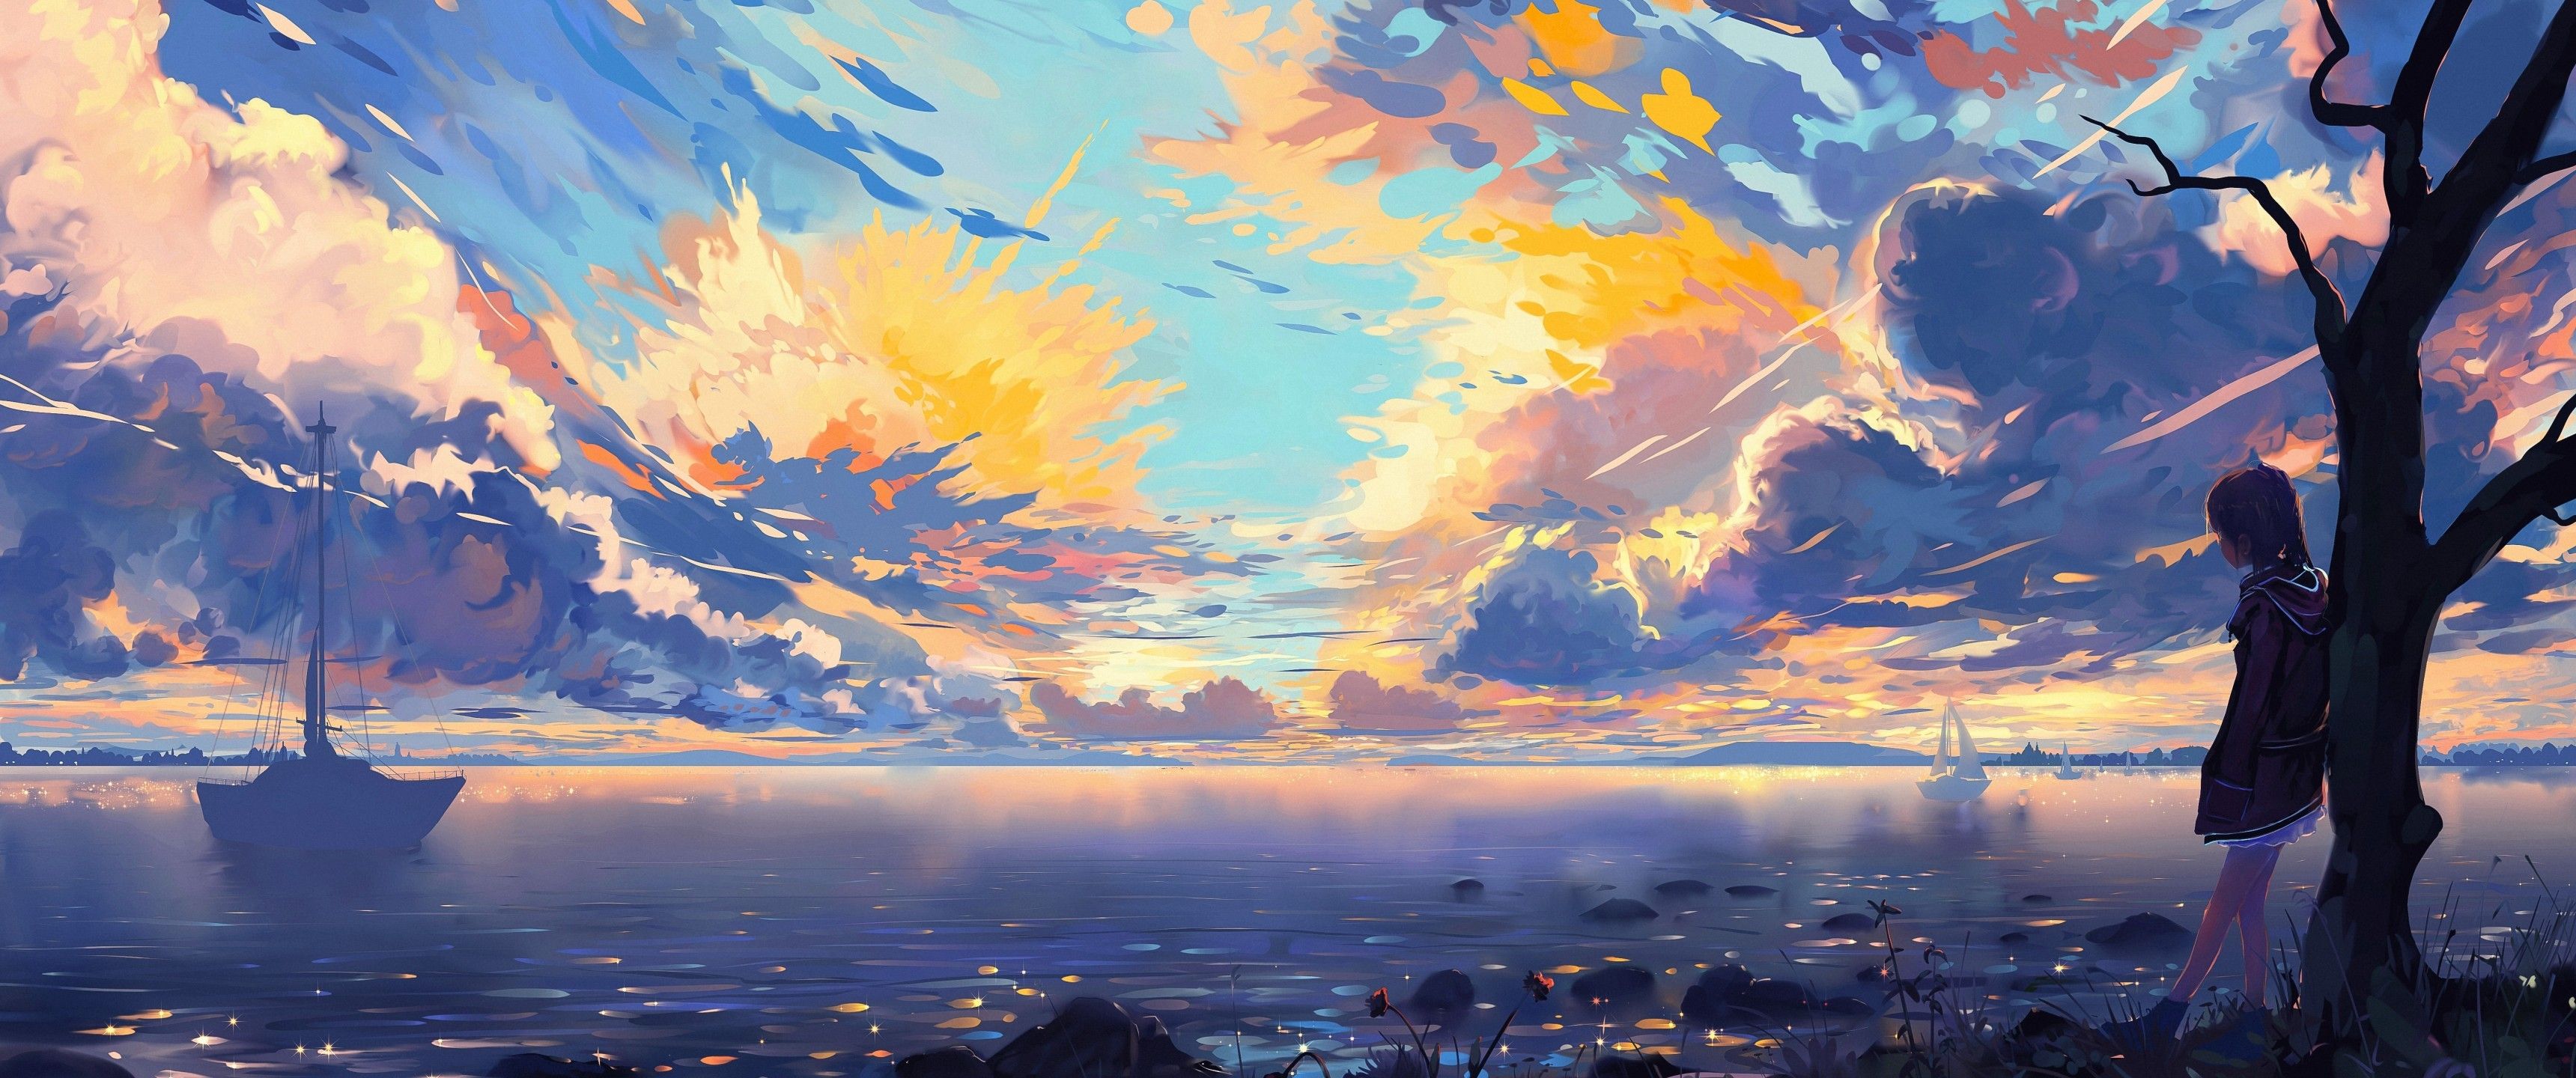 Download 3440x1440 Anime Landscape, Sea, Ships, Colorful, Clouds, Scenic, Tree, Horizon Wallpaper